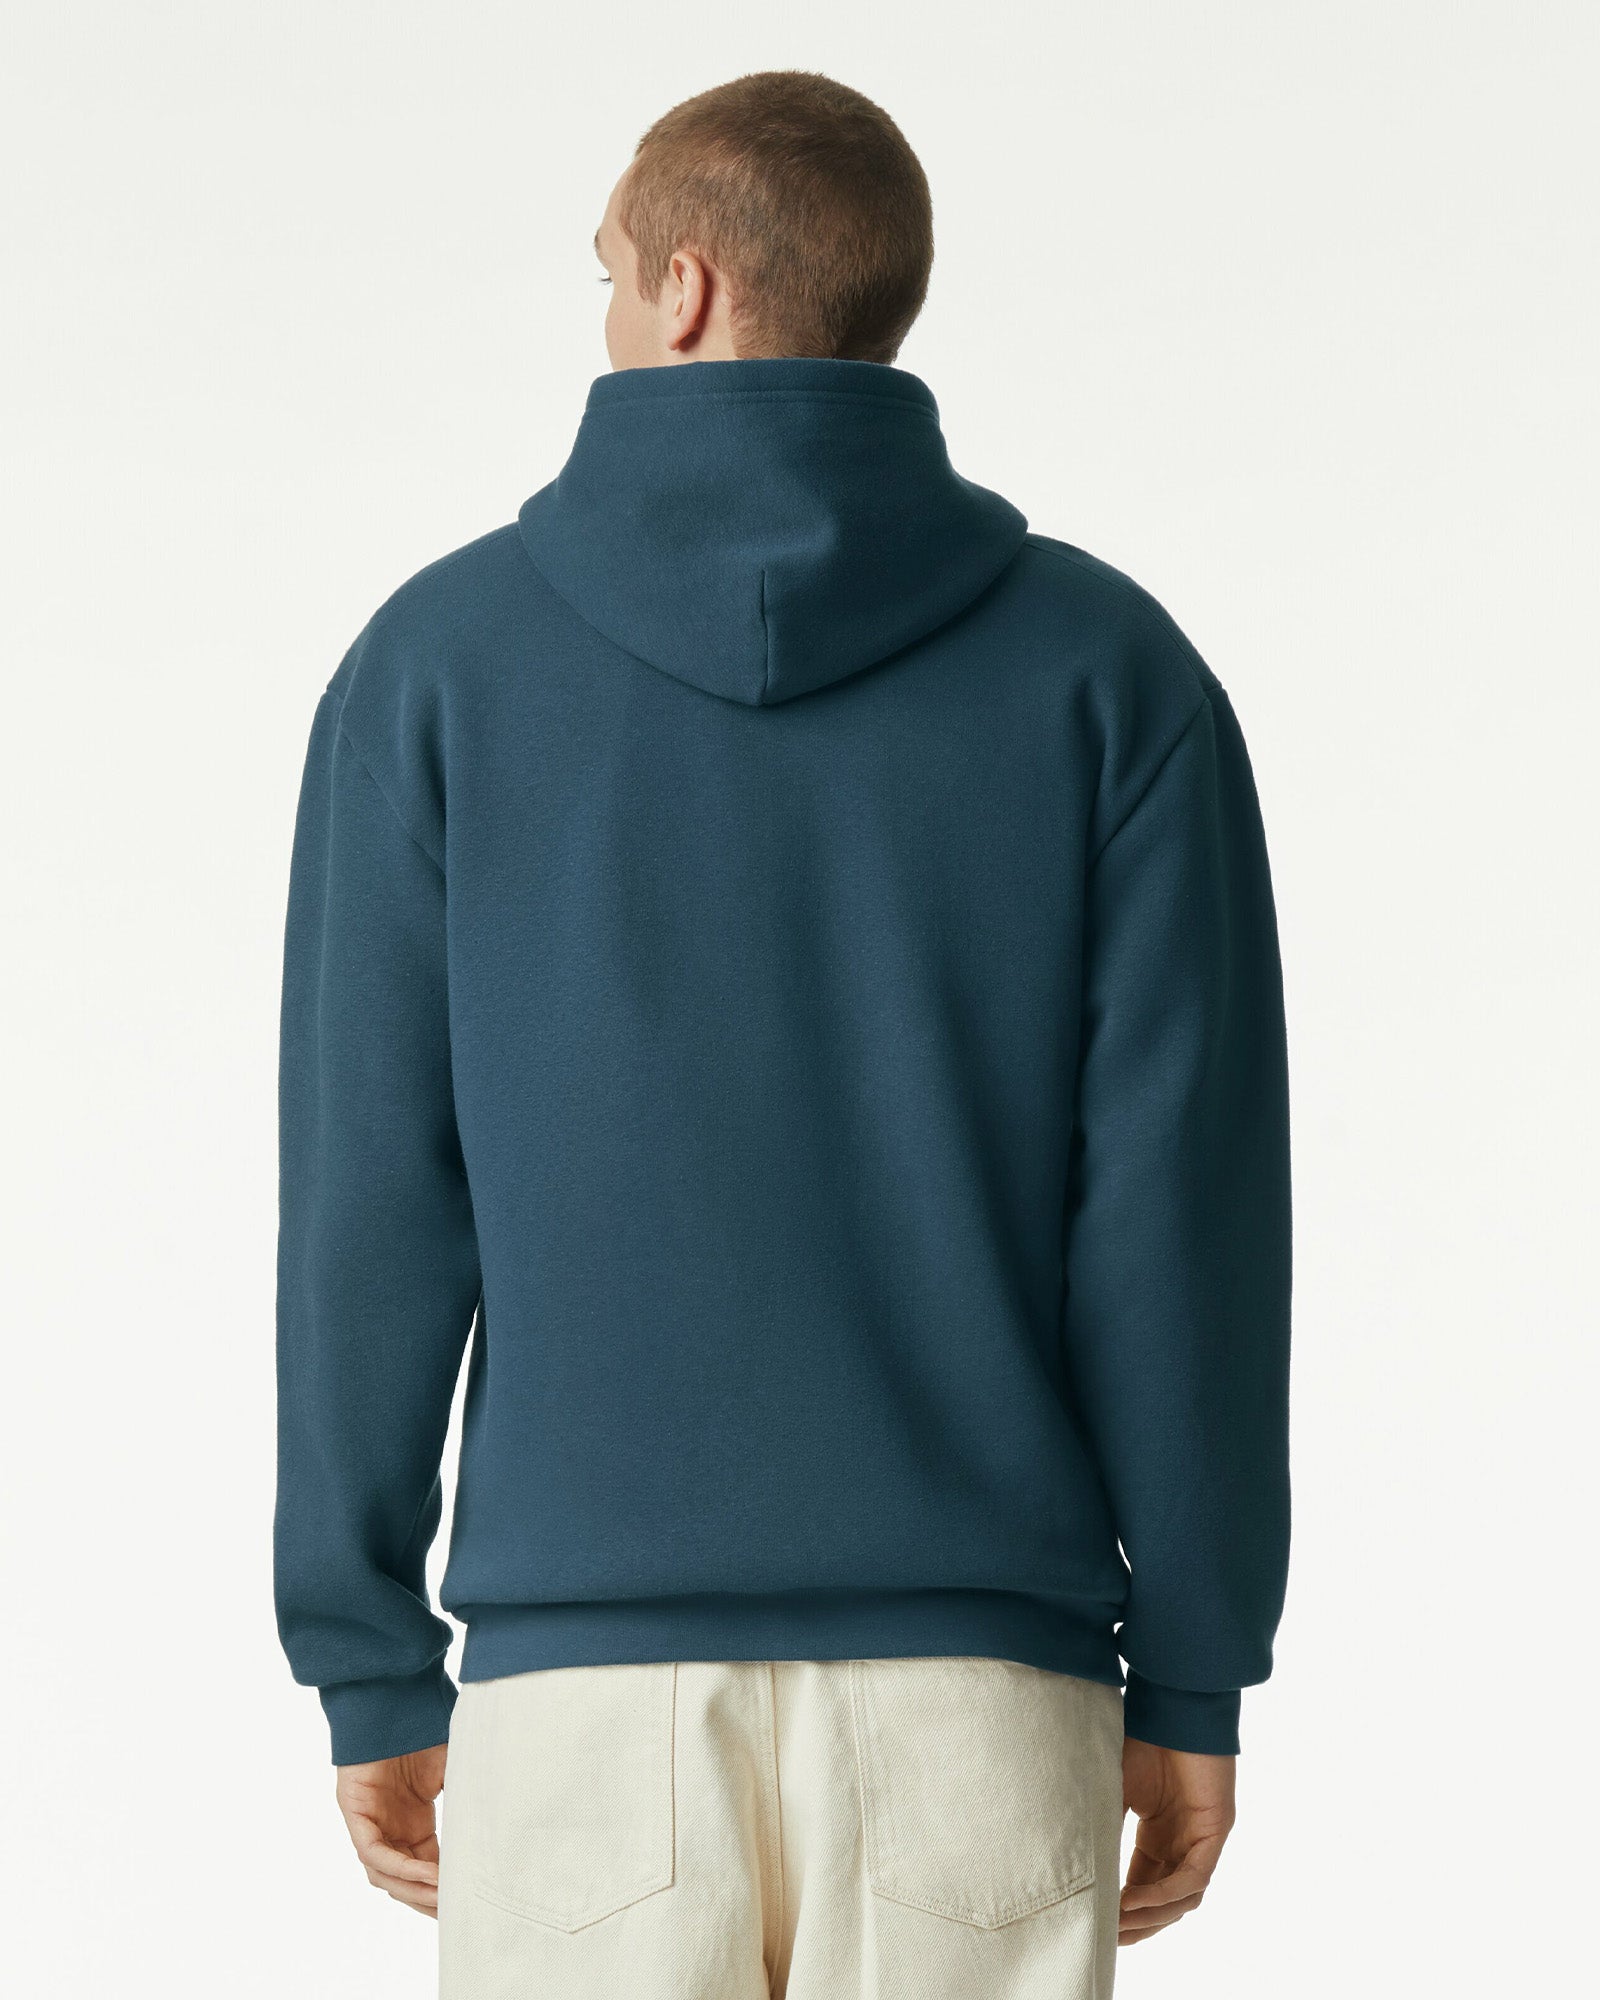 Reflex Unisex Full Zip Hooded Sweatshirt - Sea Blue